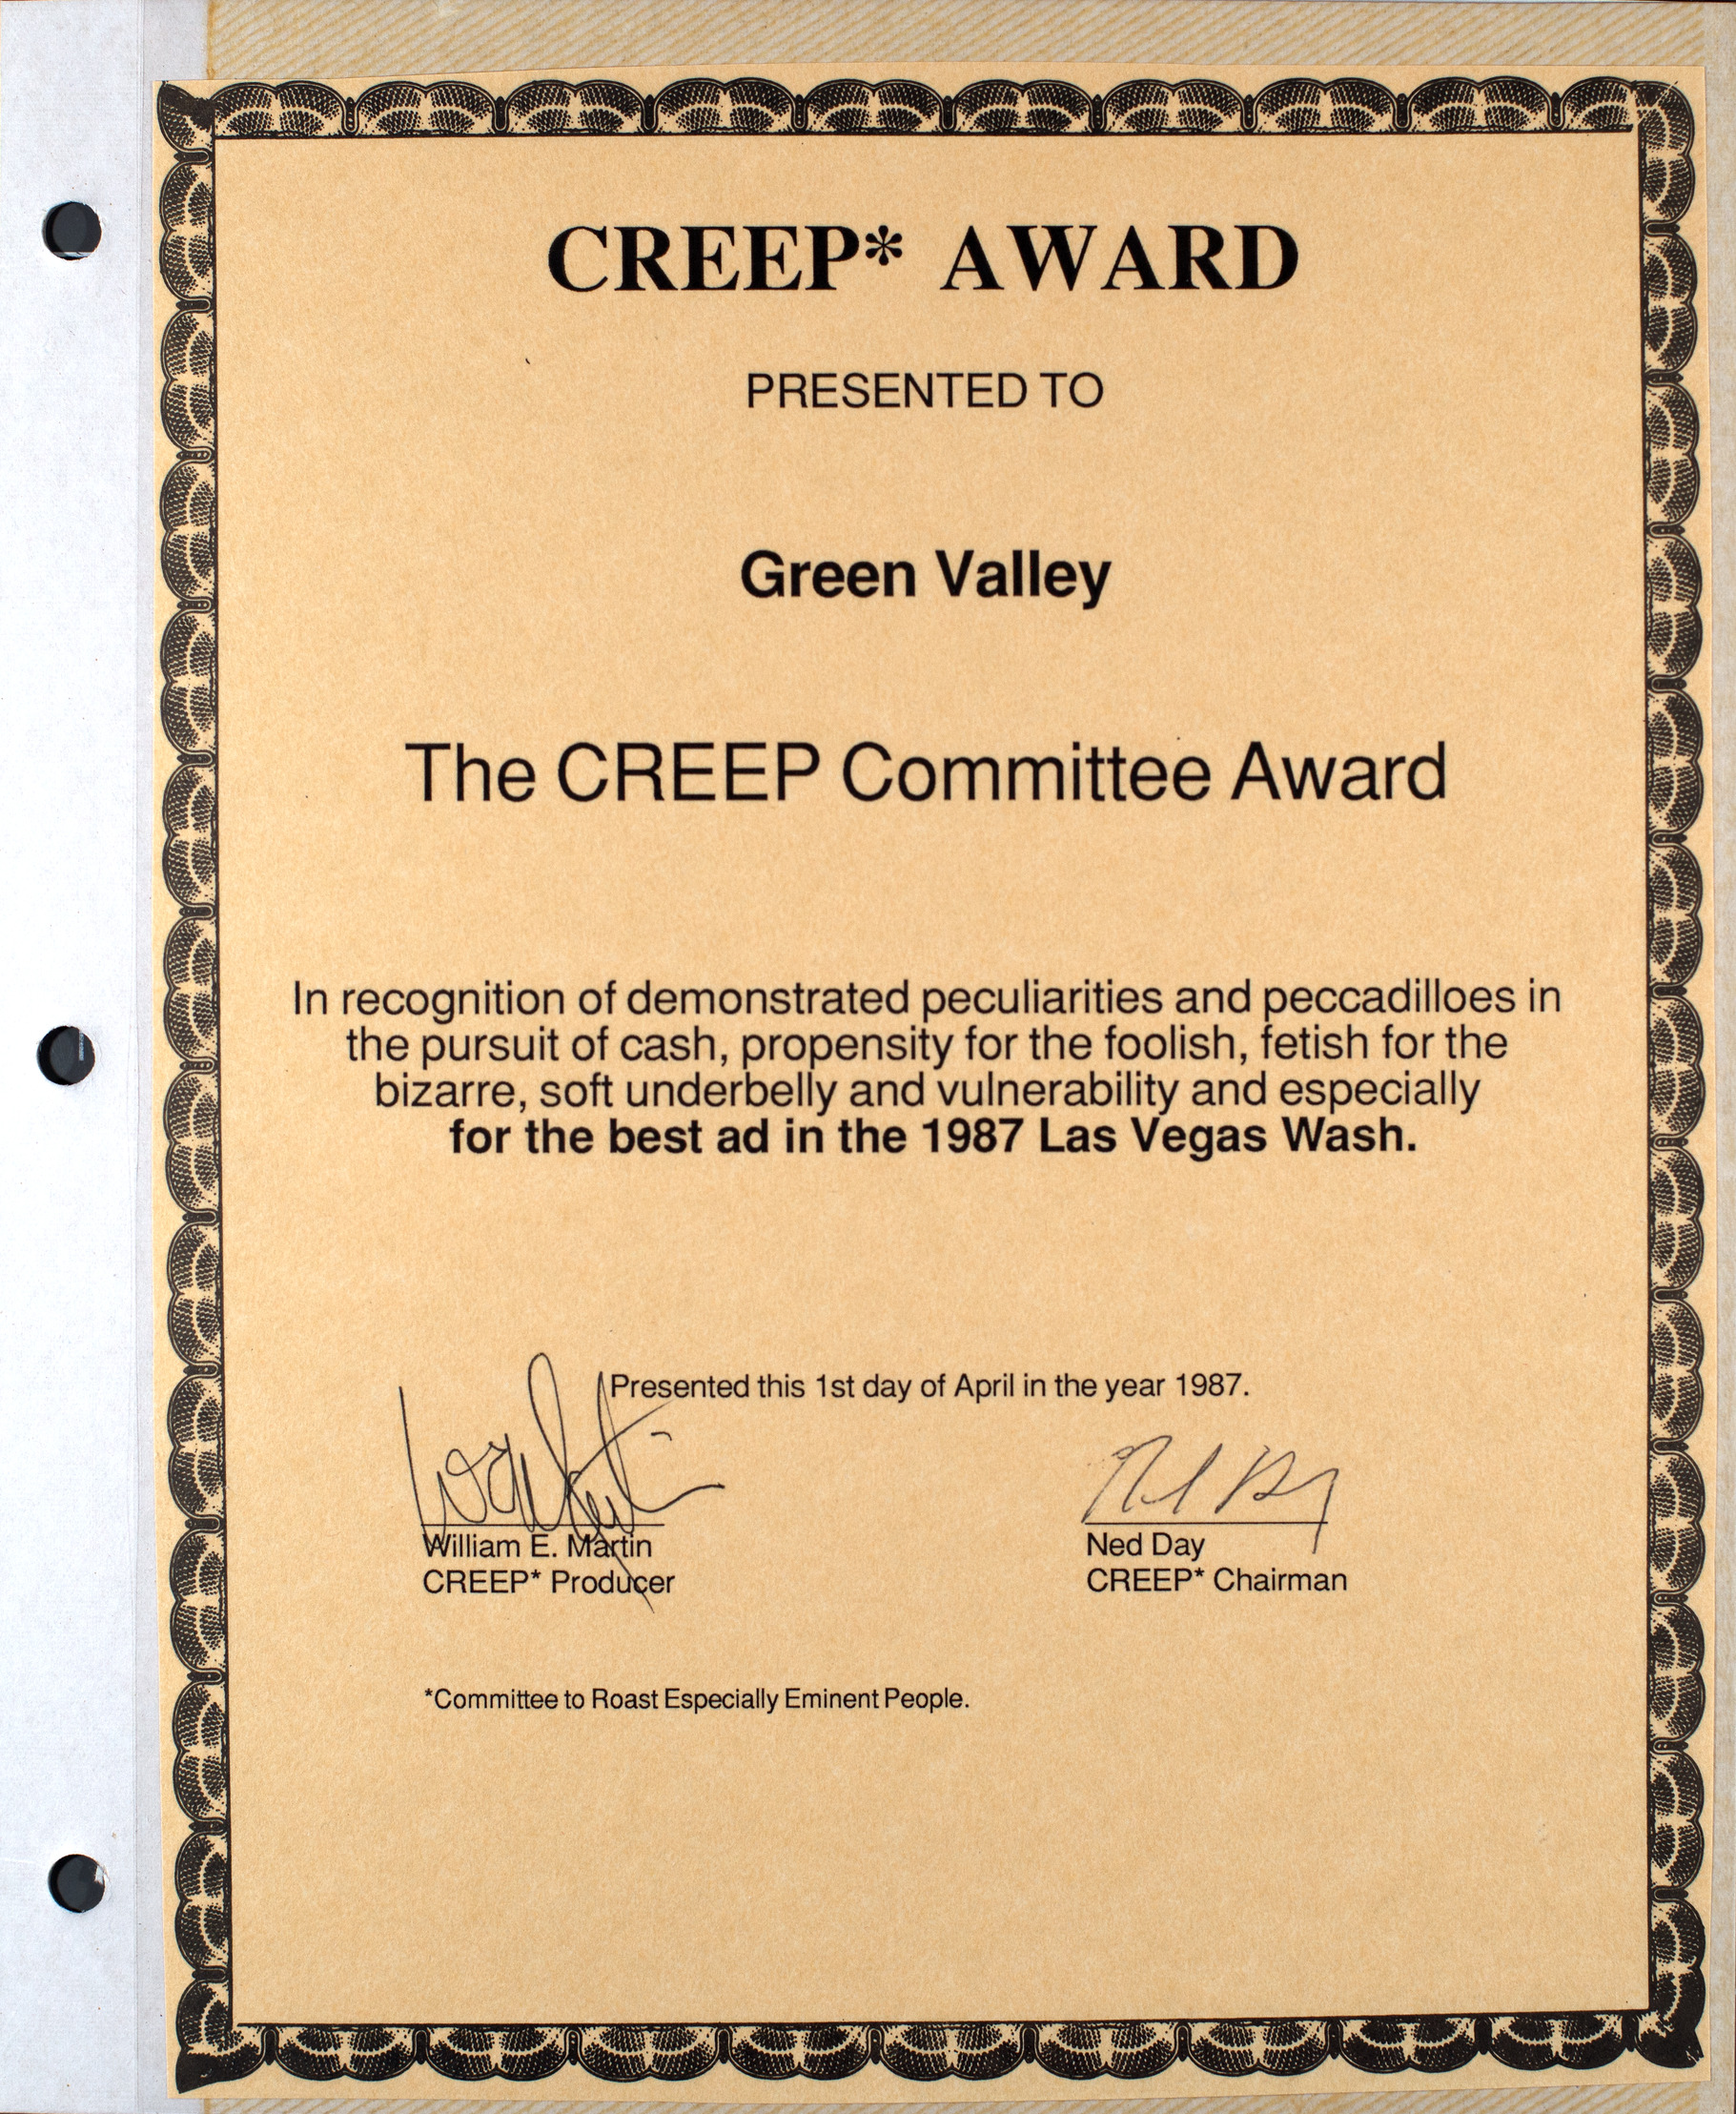 CREEP Award presented to Green Valley, April 1, 1987